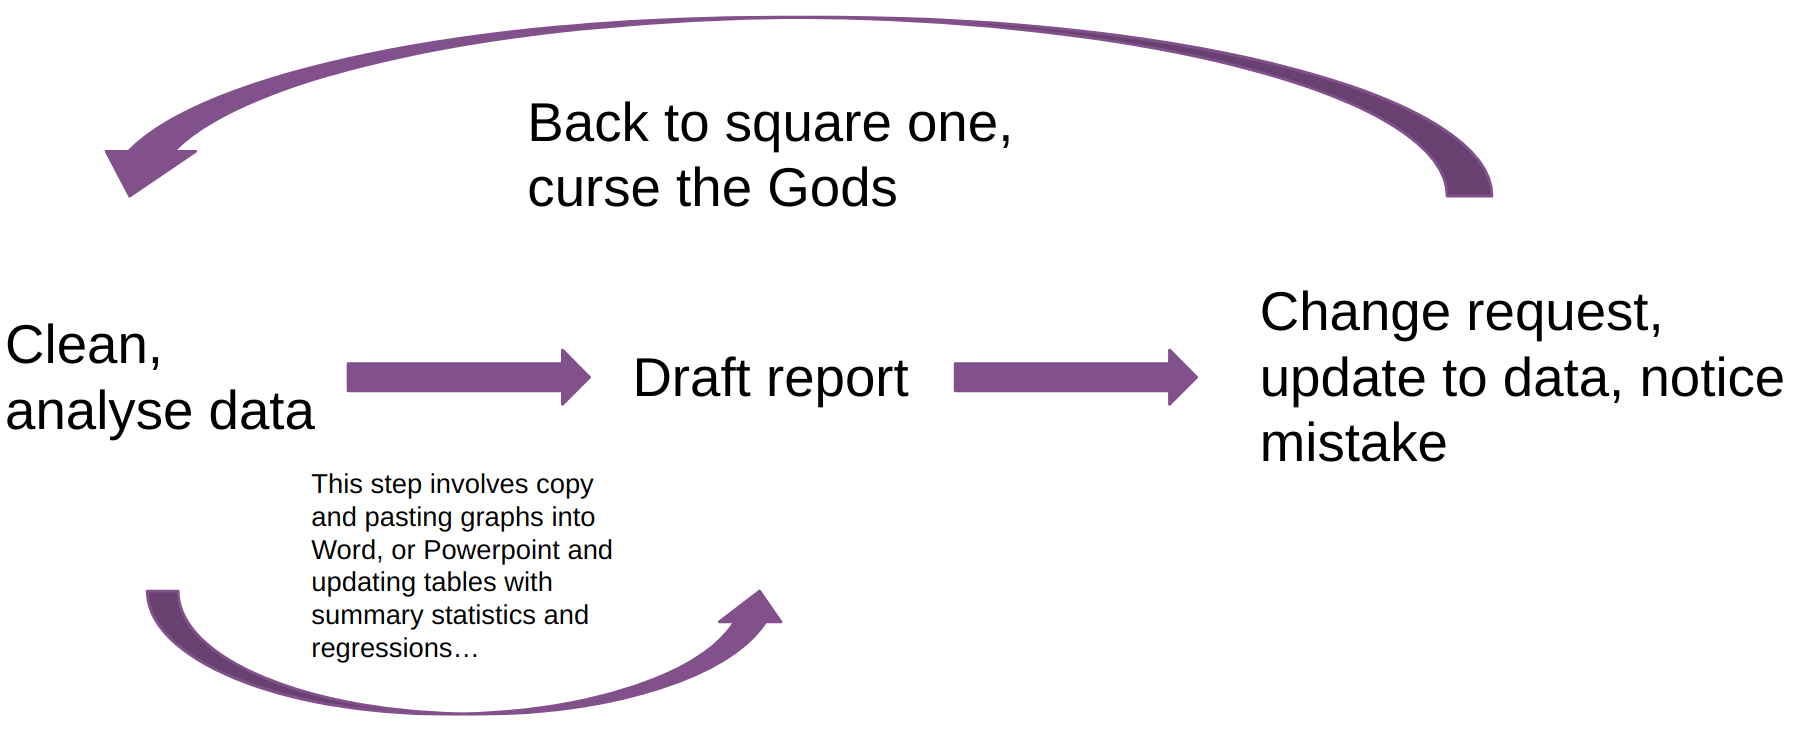 The cursed report drafting loop.